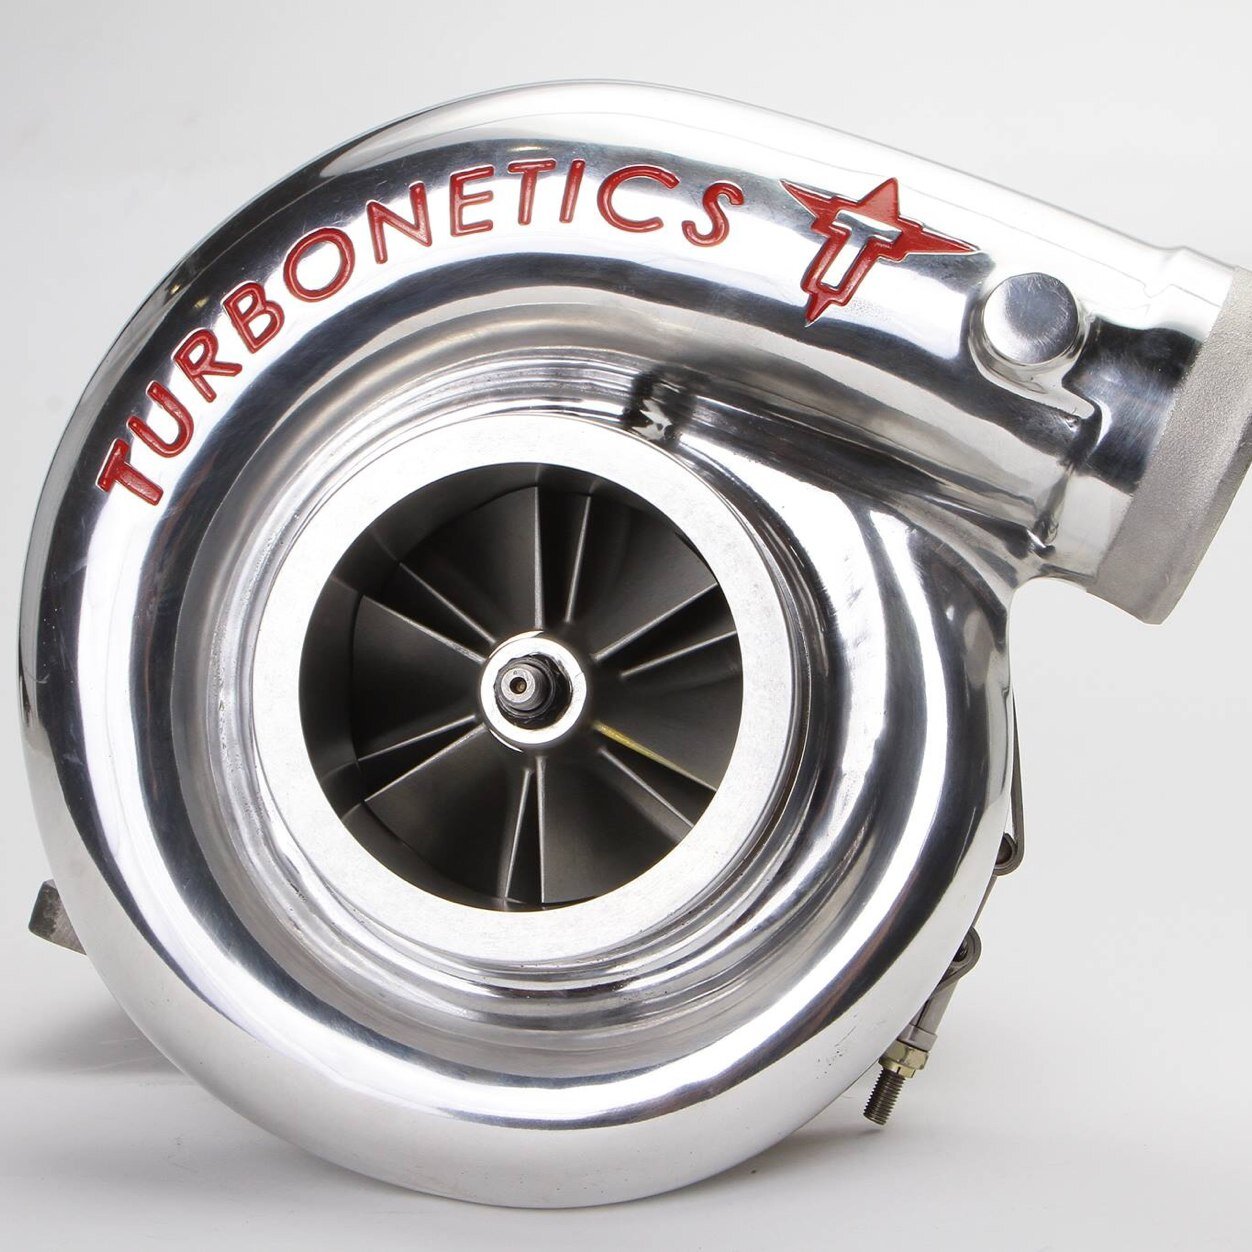 Turboics Inc On Repost HDhirez Turbo